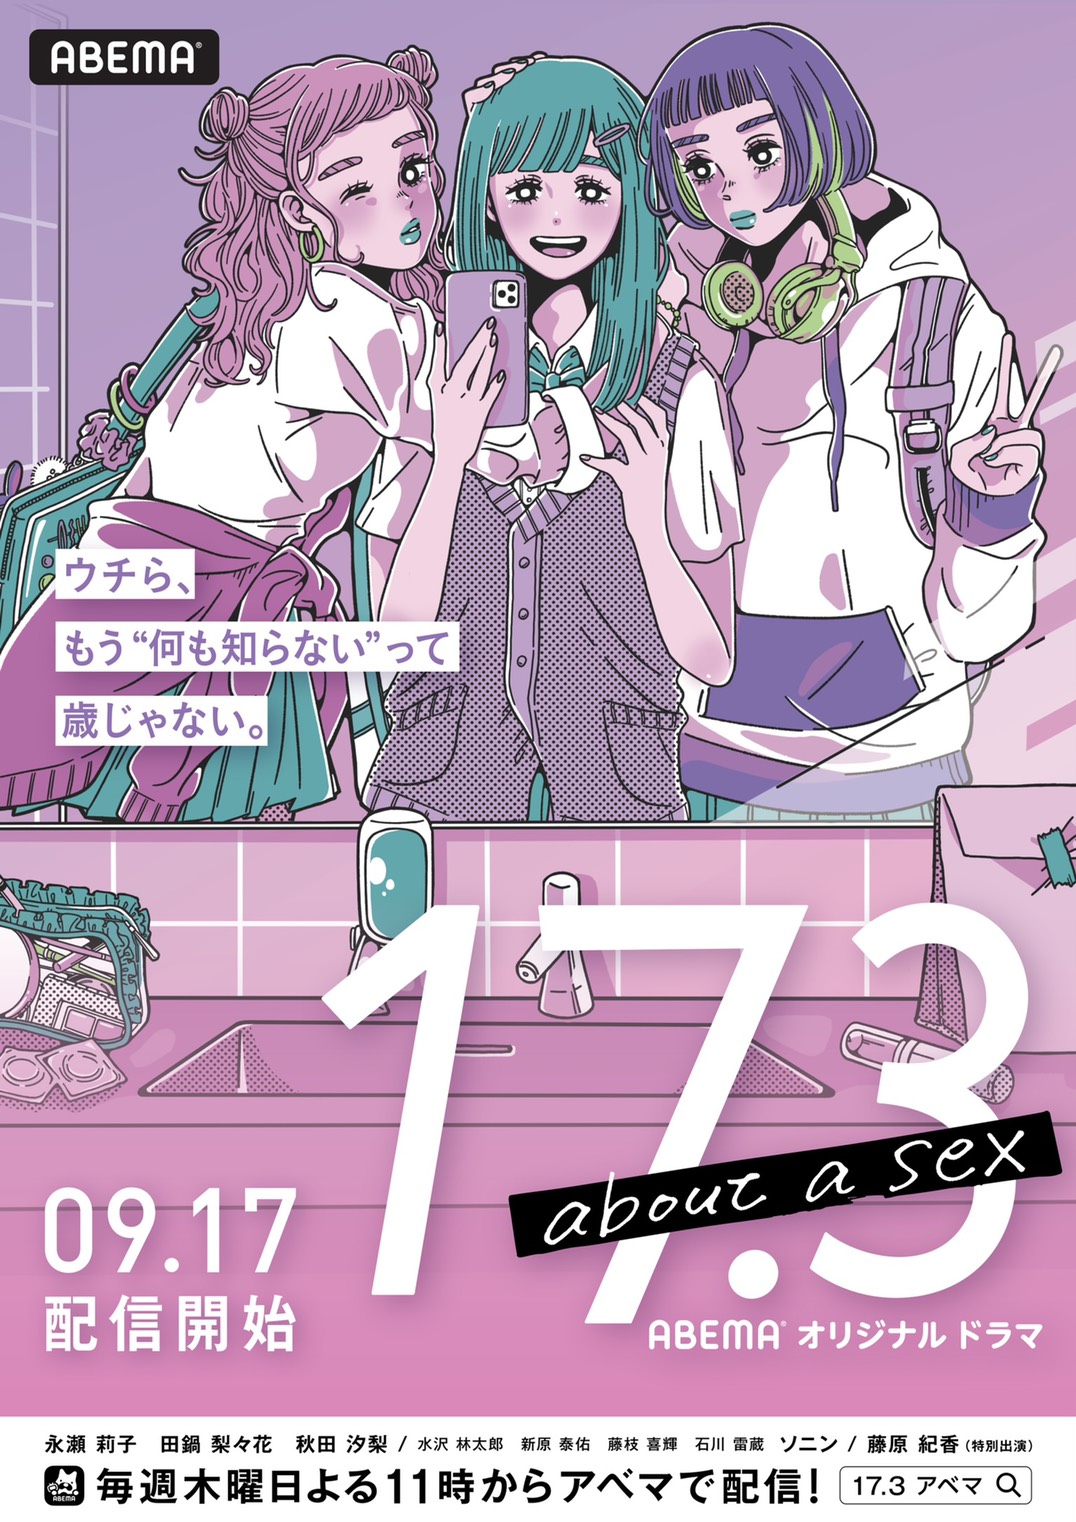 ABEMA 「17.3 about a sex」 Key Visual﻿-Illustration : Nah